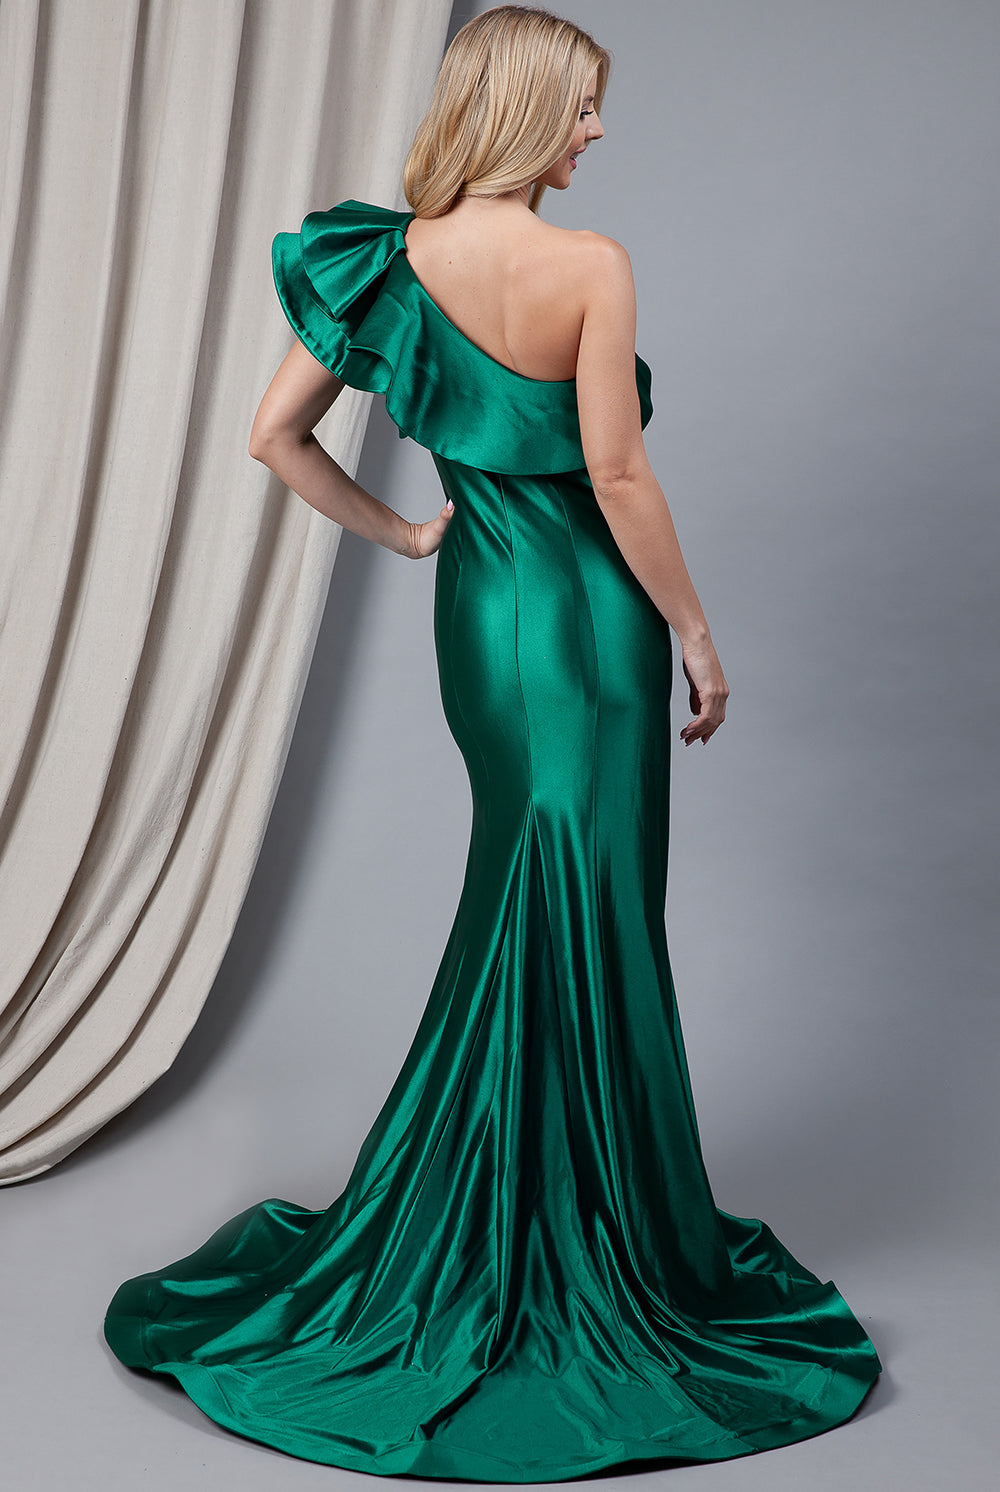 One Shoulder Side Slit Satin Long Prom Dress AC5042-Prom Dress-smcfashion.com